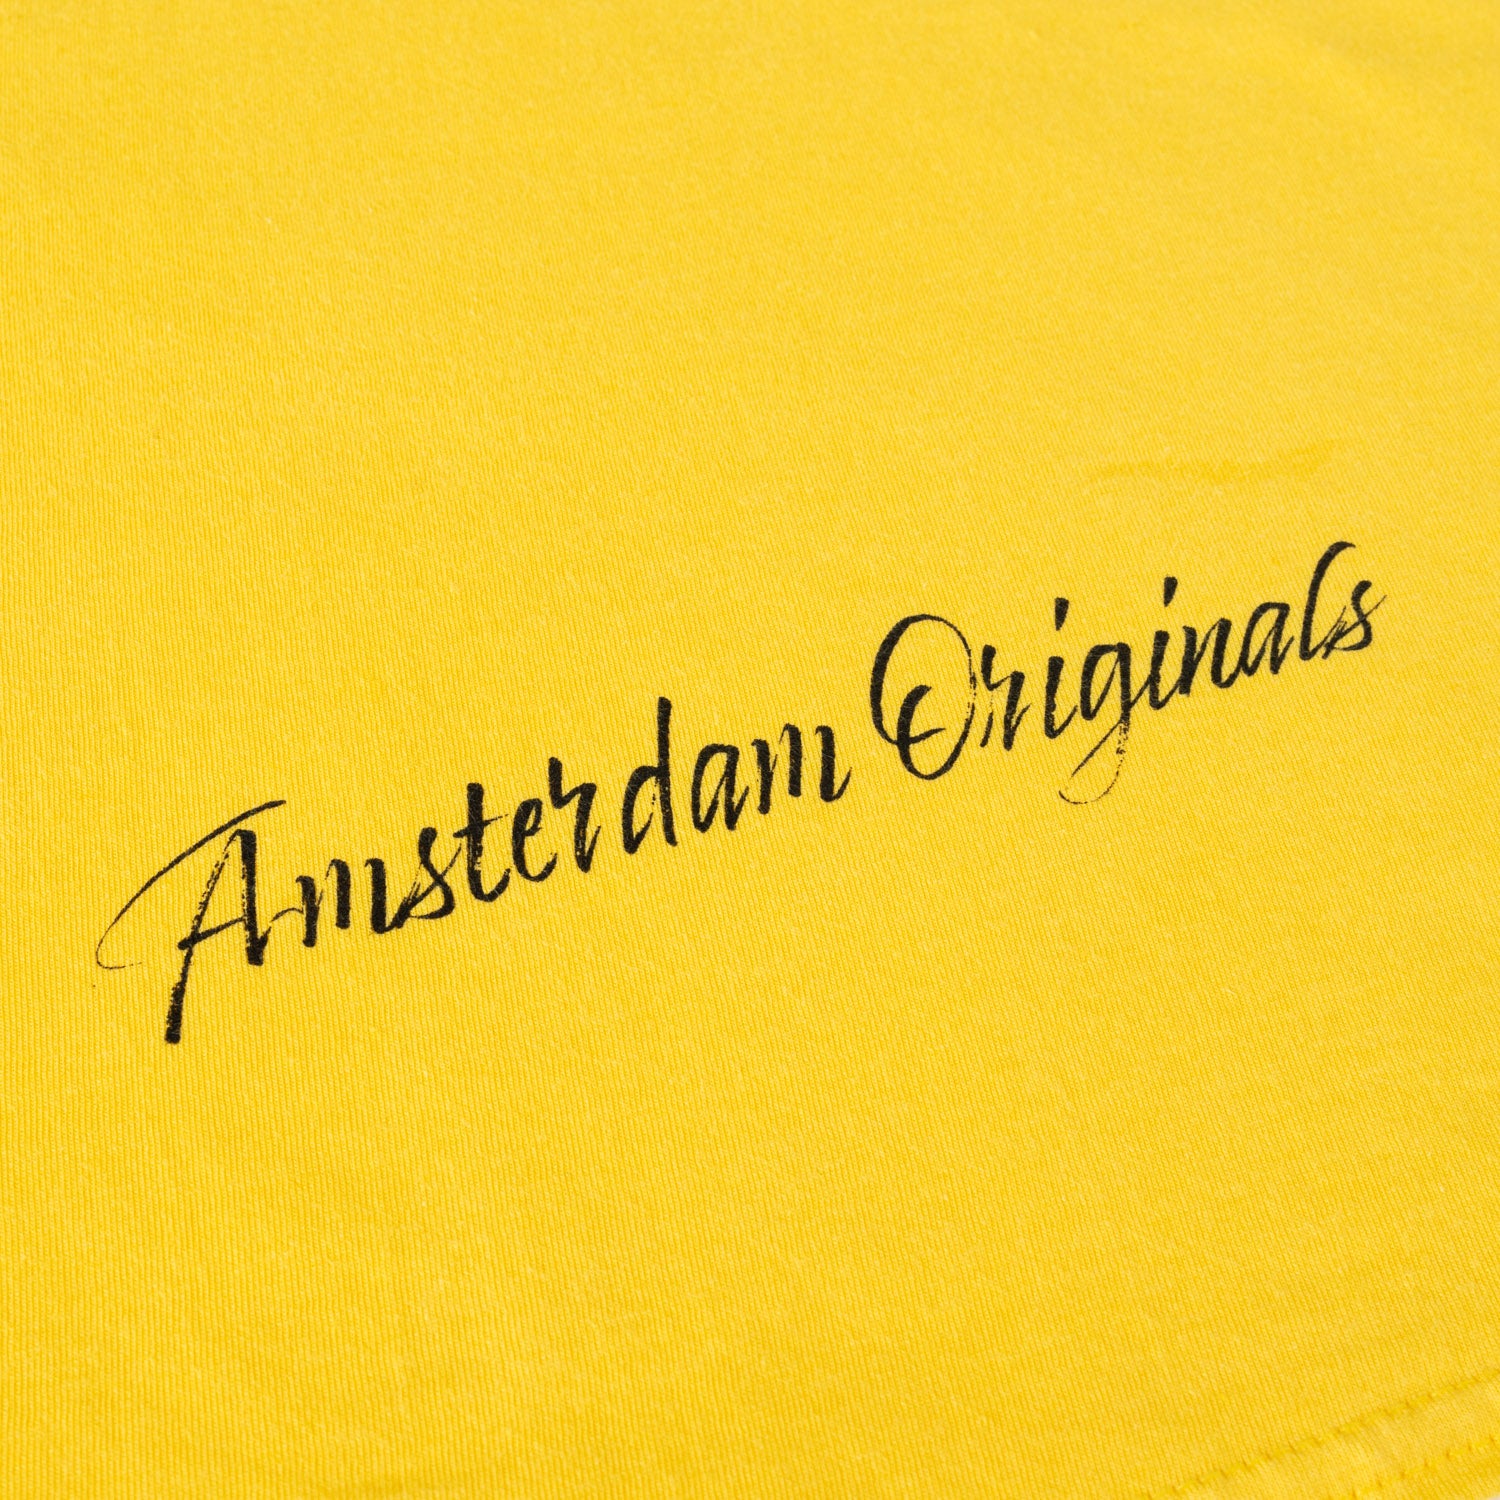 T-shirt Amsterdam Originals Palmtree